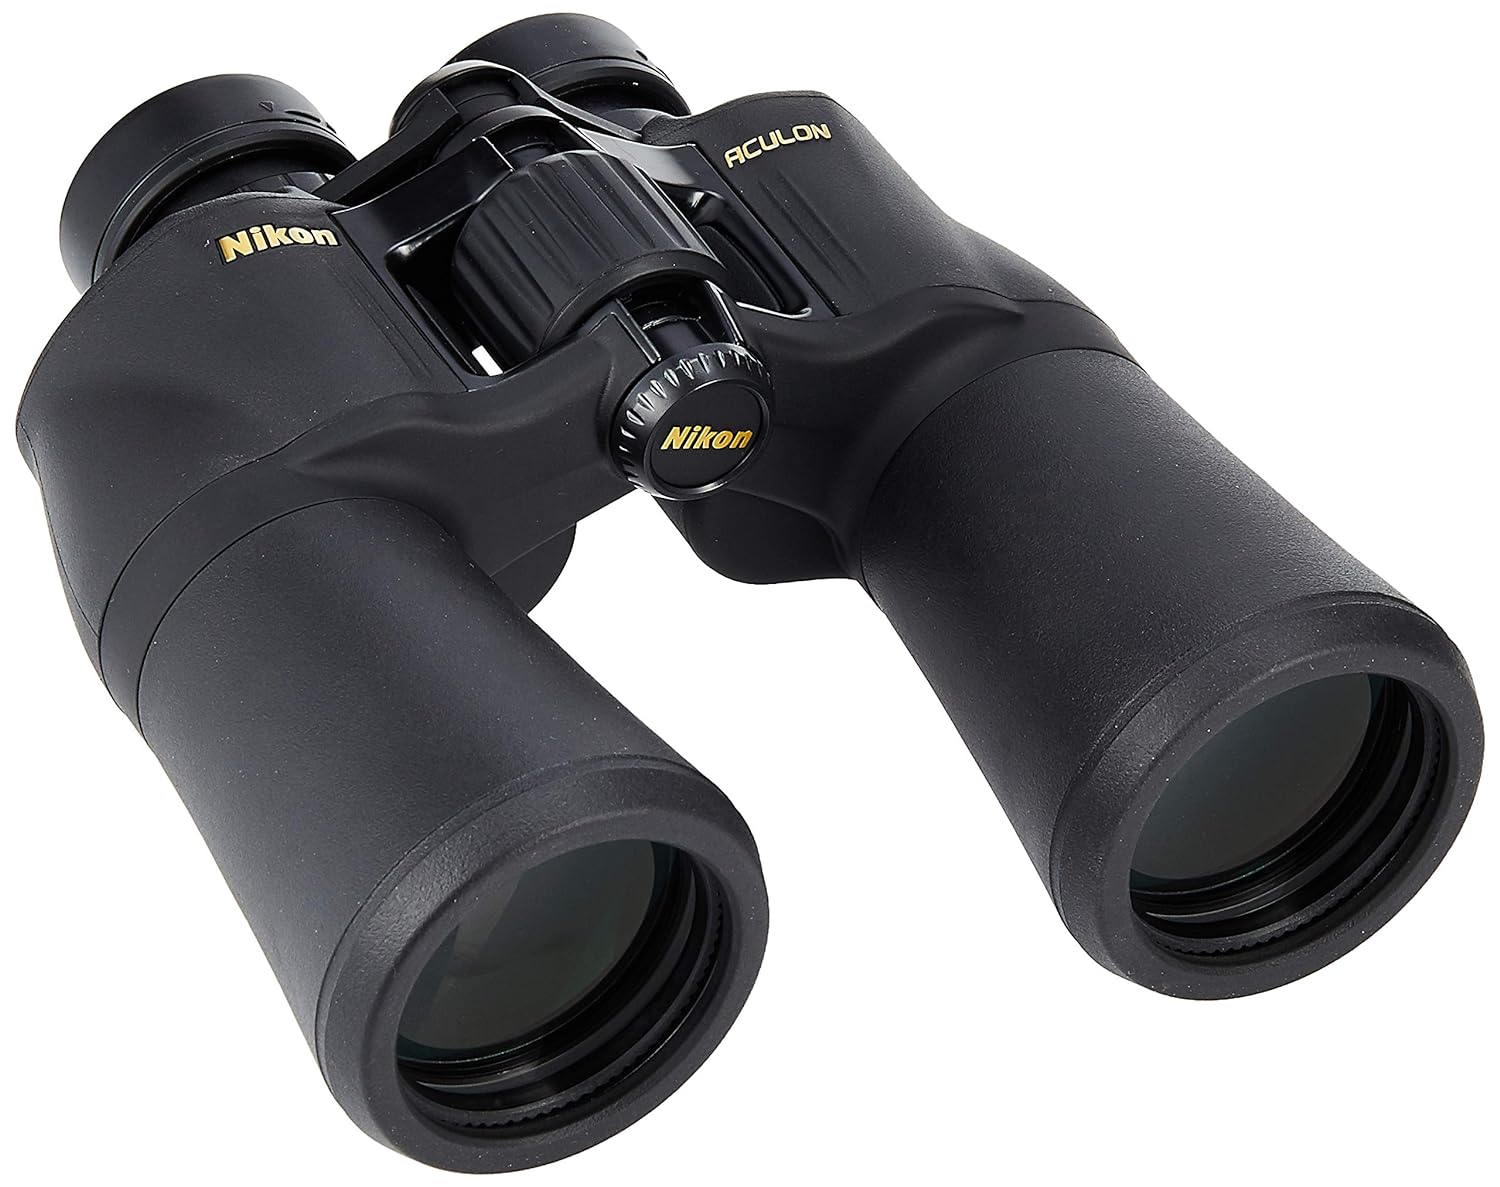 Looking to Buy Nikon 10x42 Binoculars. Learn These Top 10 Facts